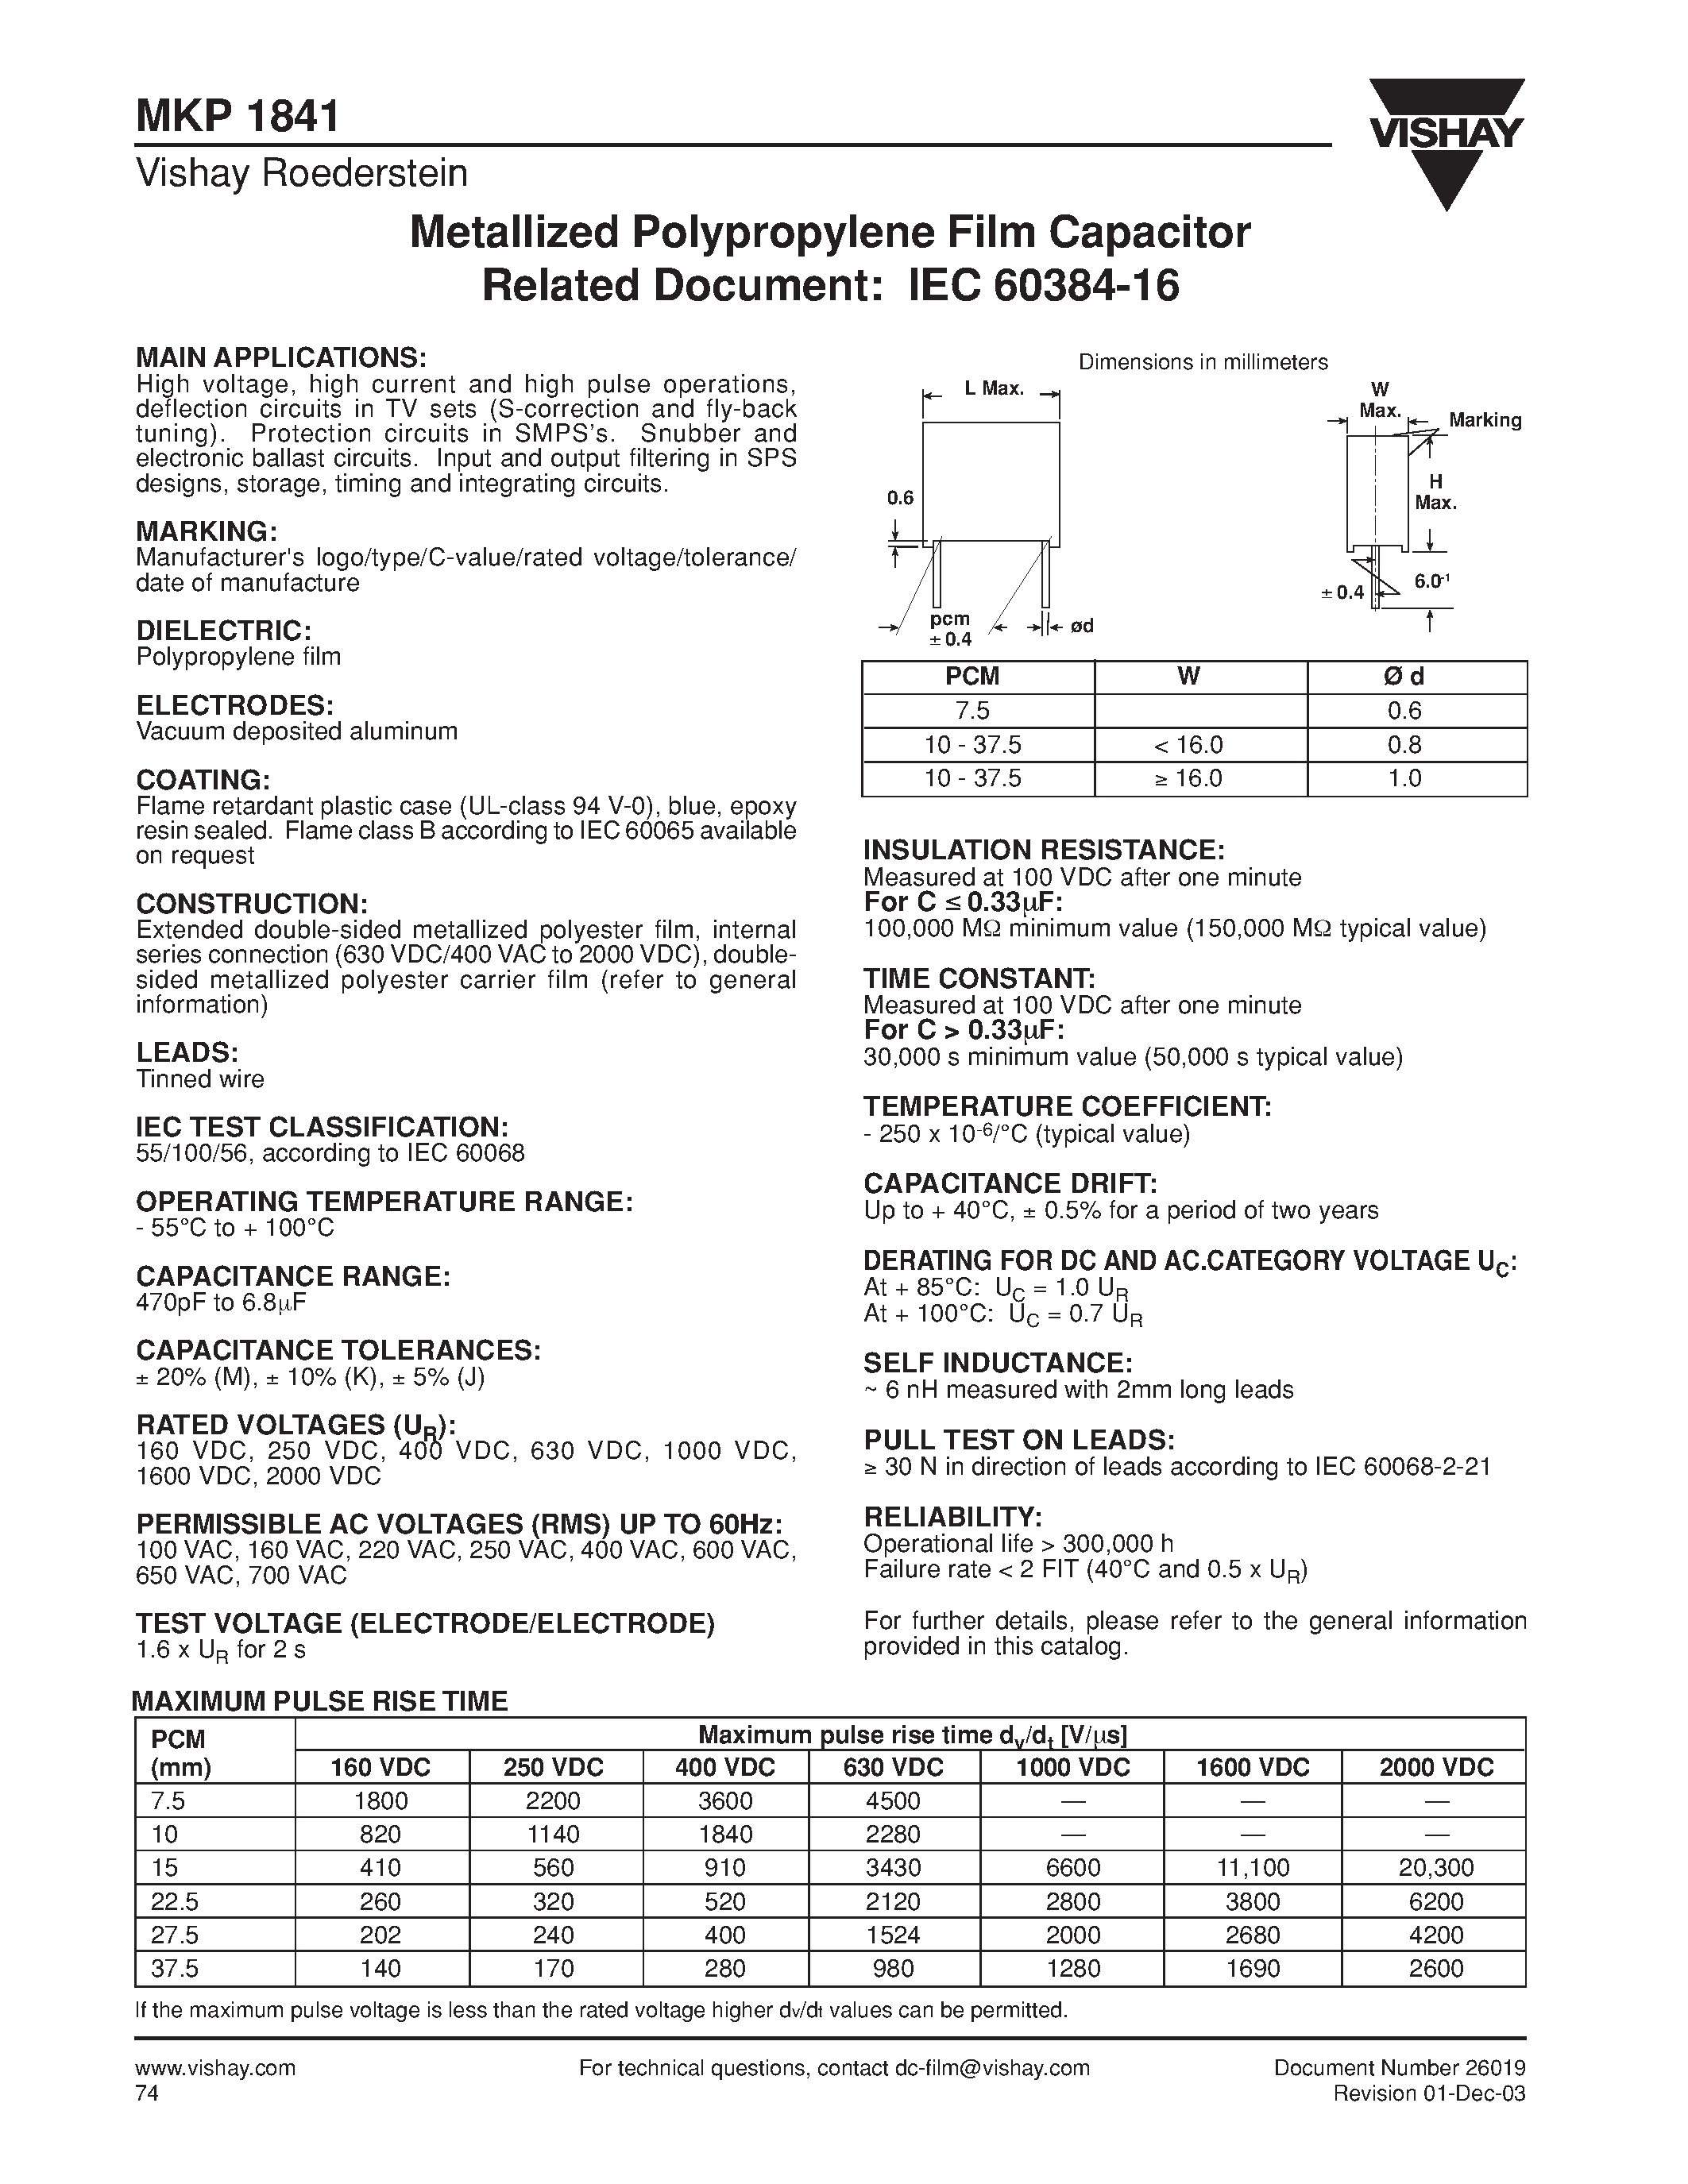 Даташит MKP1841-522-165-V - Metallized Polypropylene Film Capacitor Related Document: IEC 60384-16 страница 1